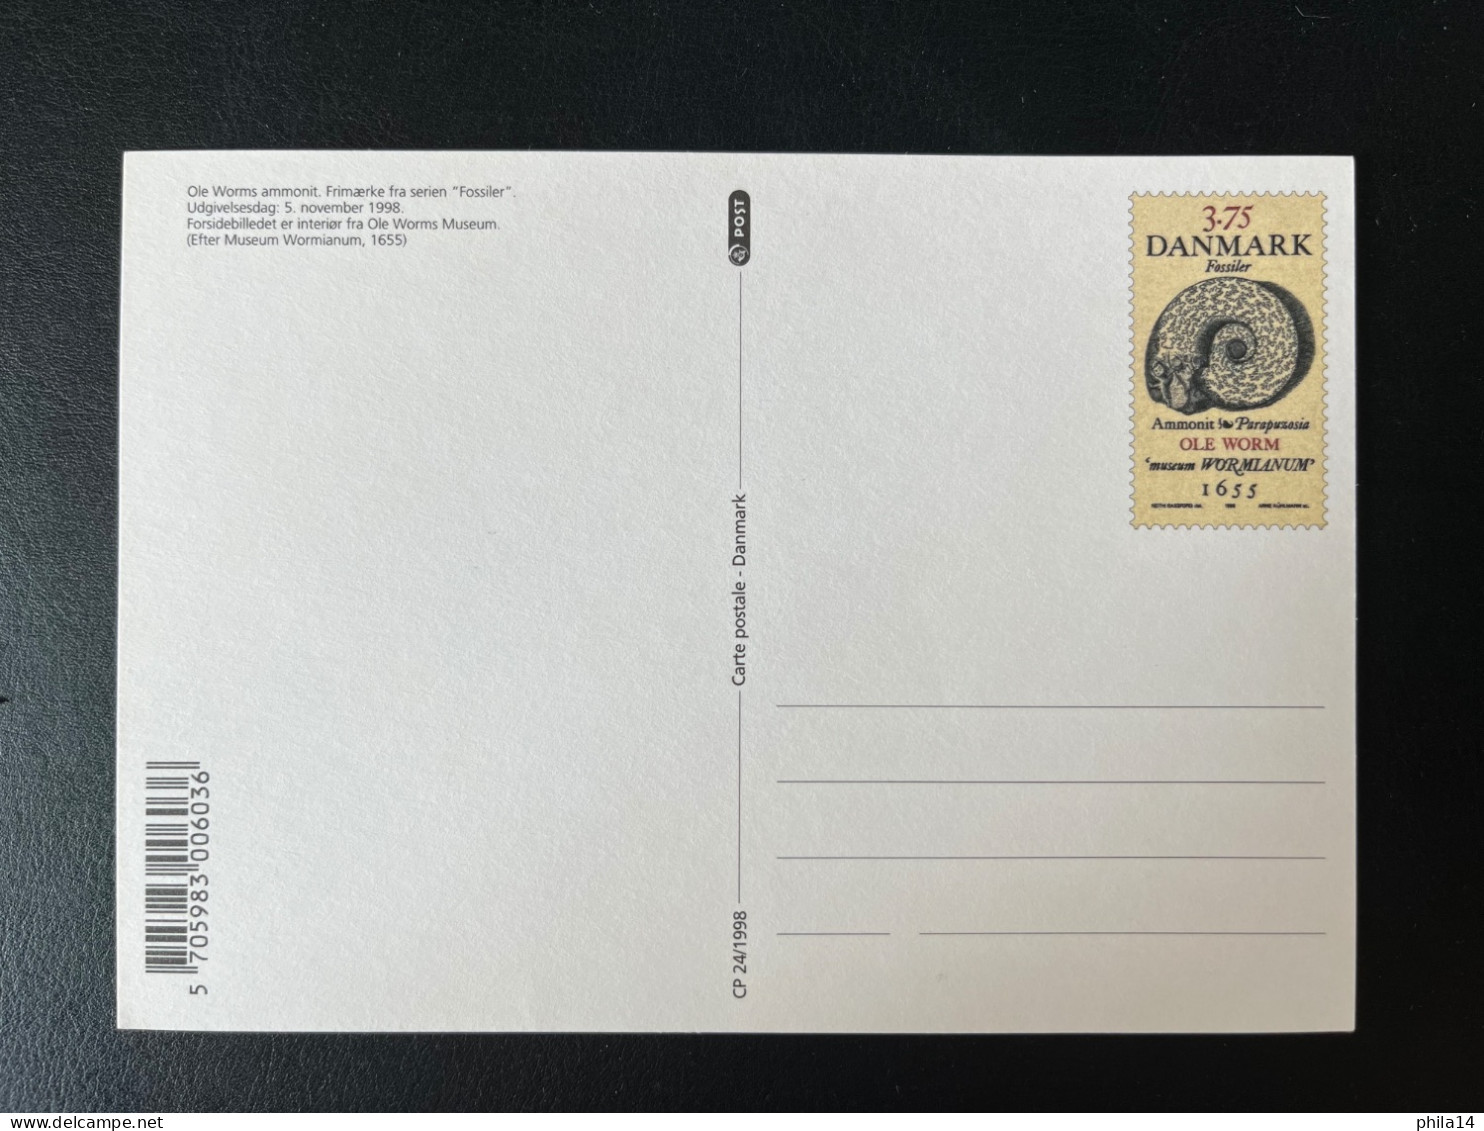 SP POST CARD DANMARK / AMMONIT PARAPUZIOSA OLE WORM 1655 / 1998 / NEUVE - Covers & Documents